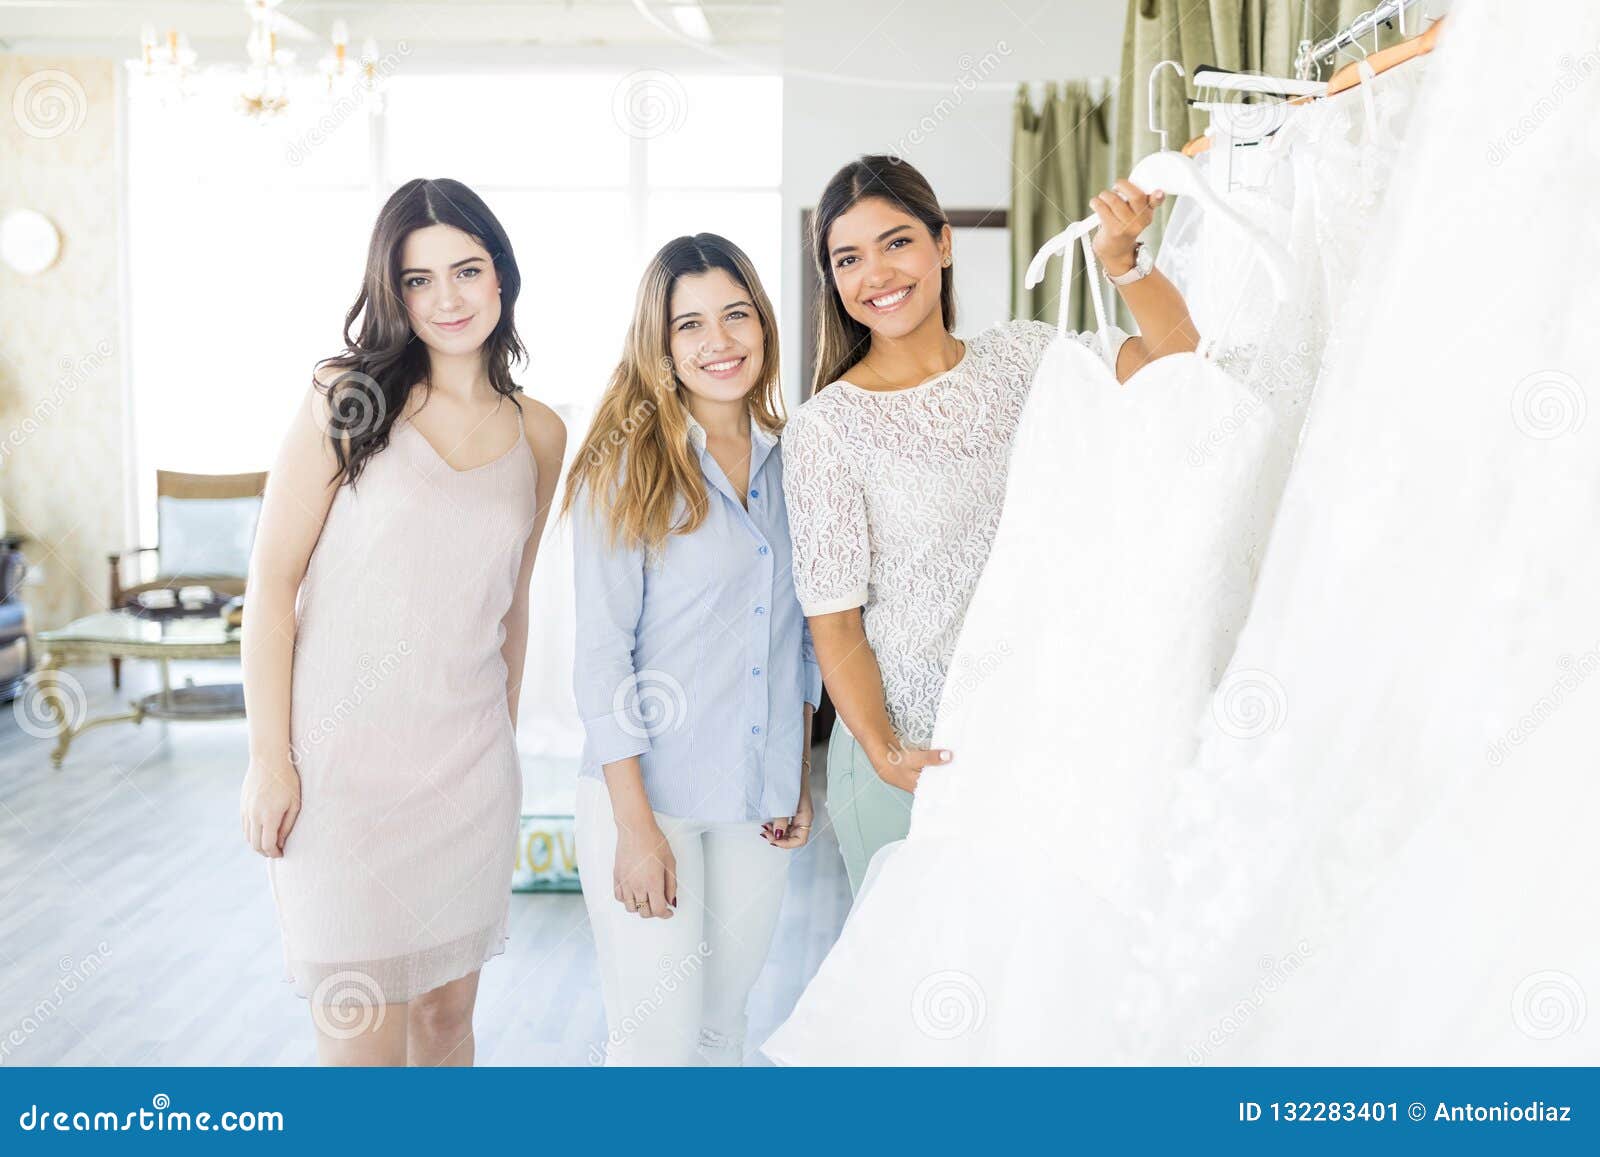 Cameron Diaz Wedding Dress Photos | POPSUGAR Fashion